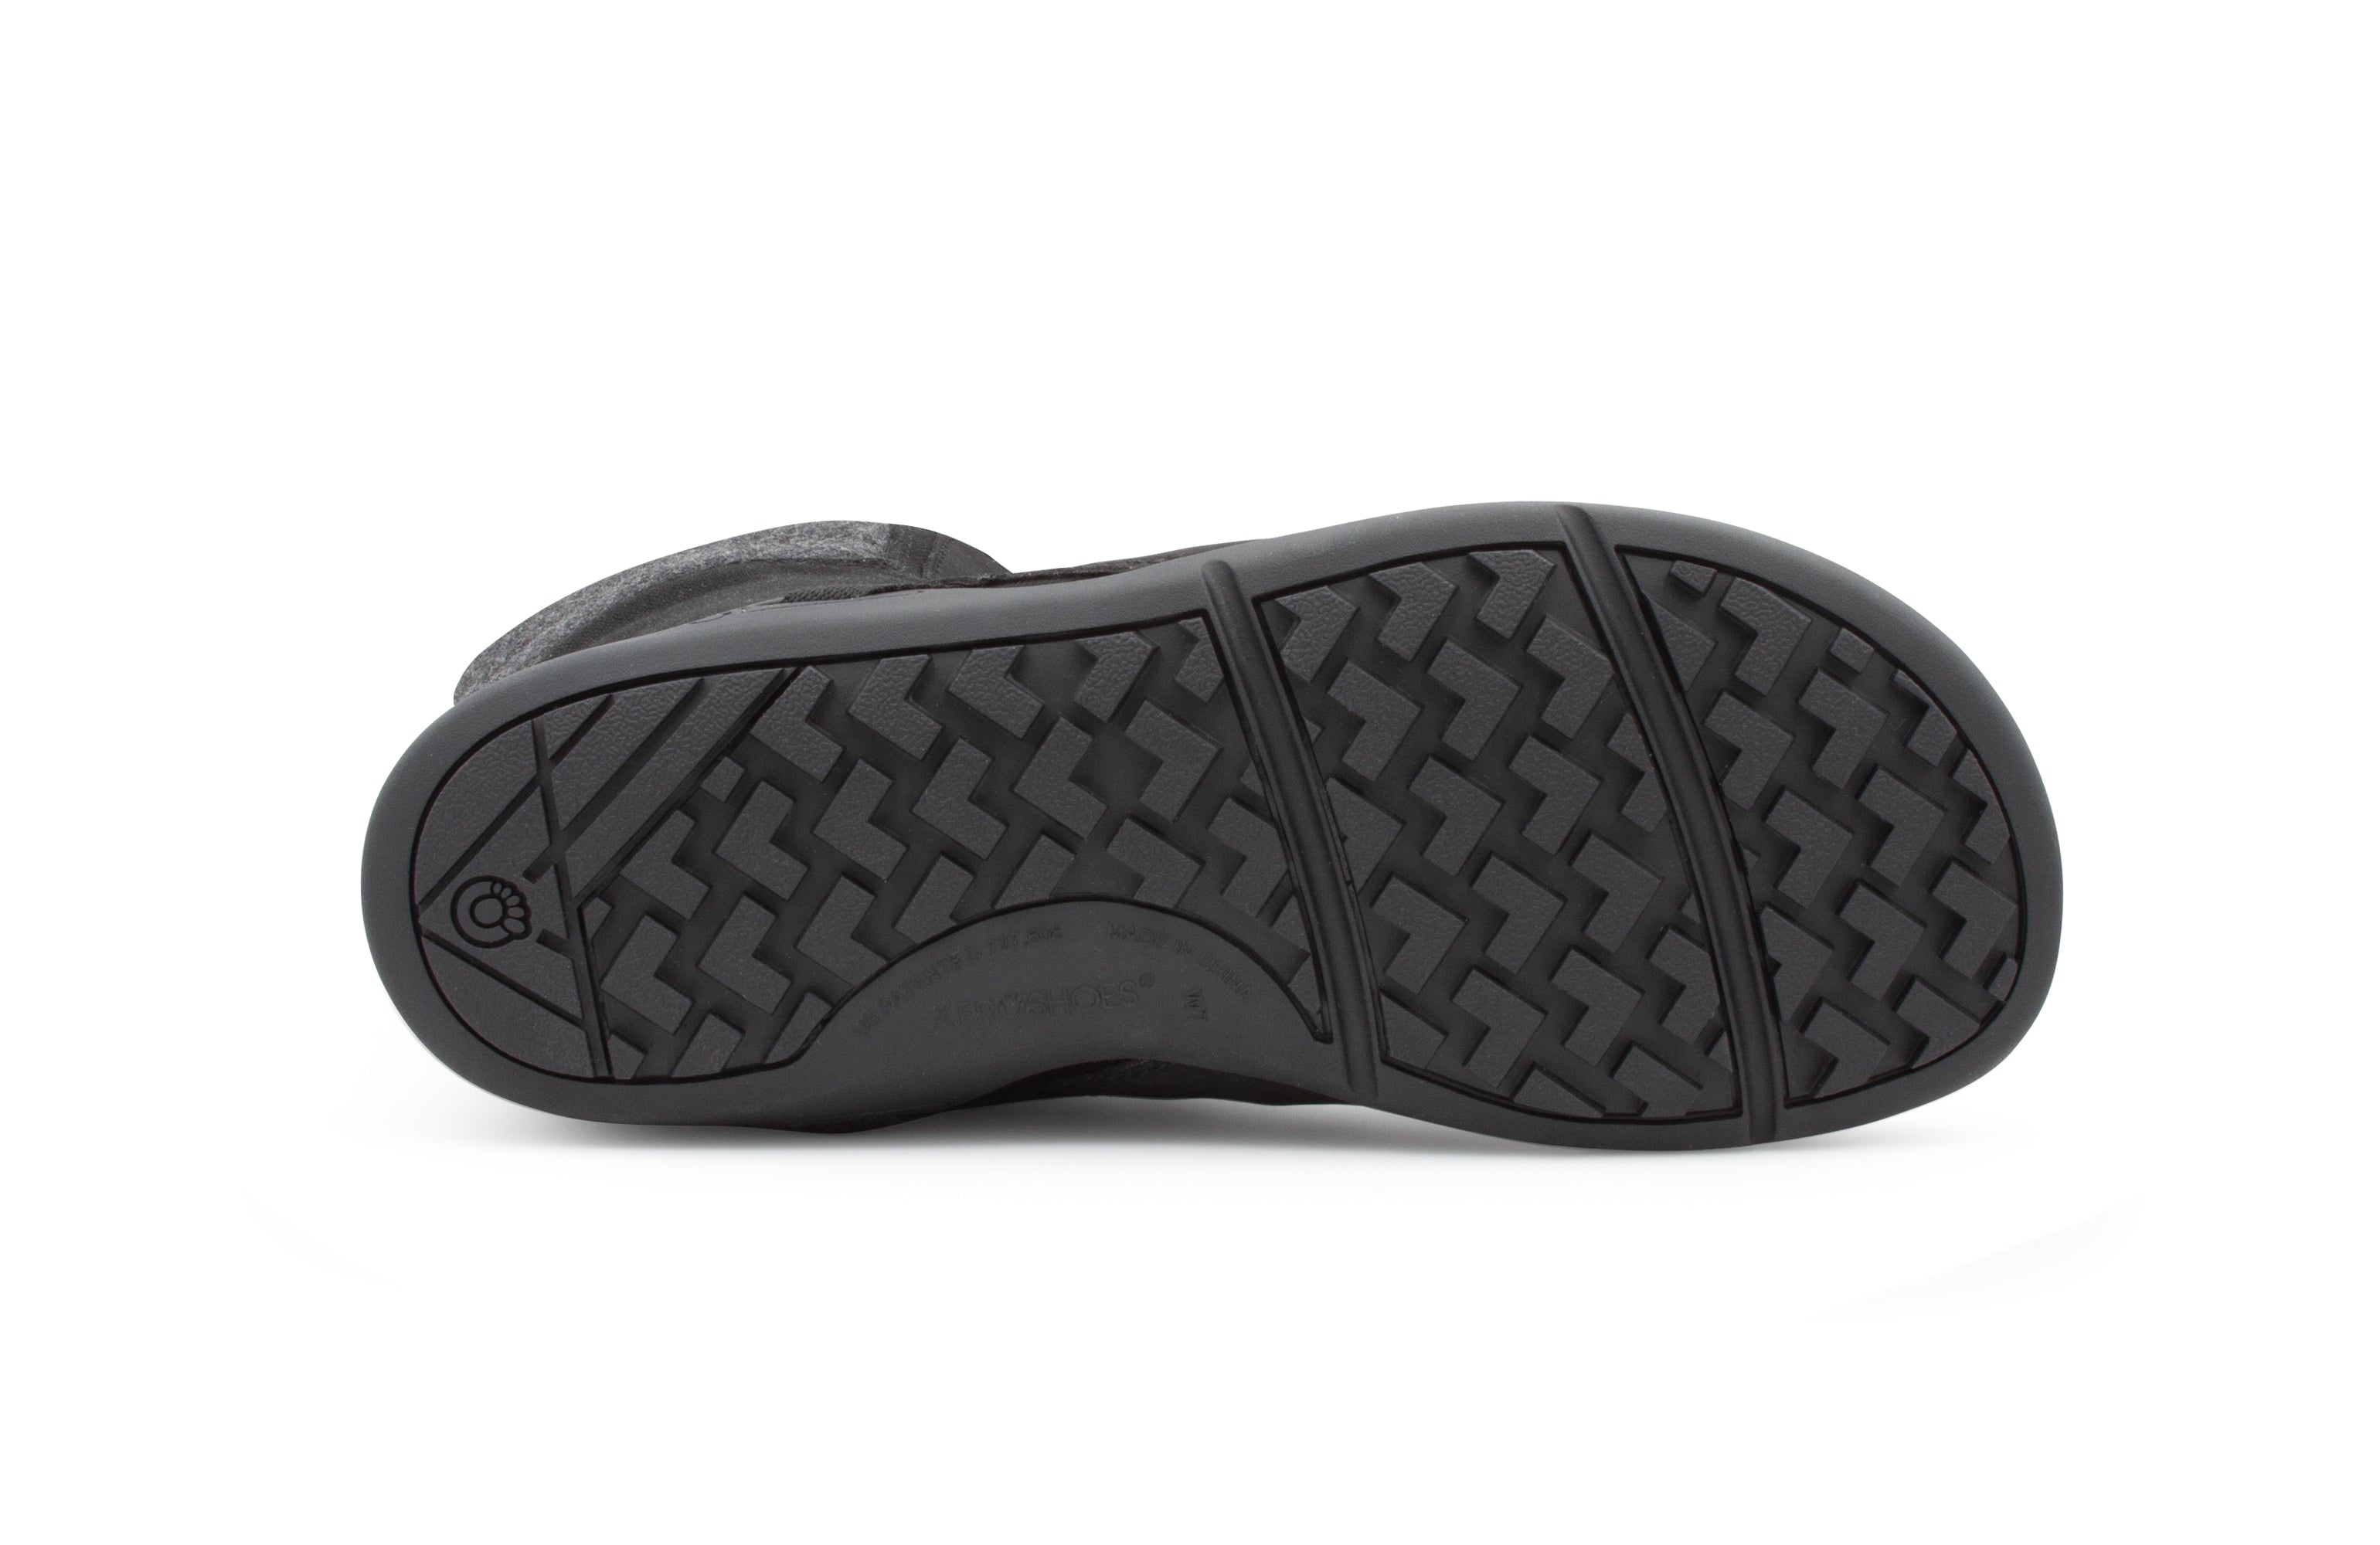 Xero Shoes Mika barfods vinterstøvler til kvinder i farven black, saal